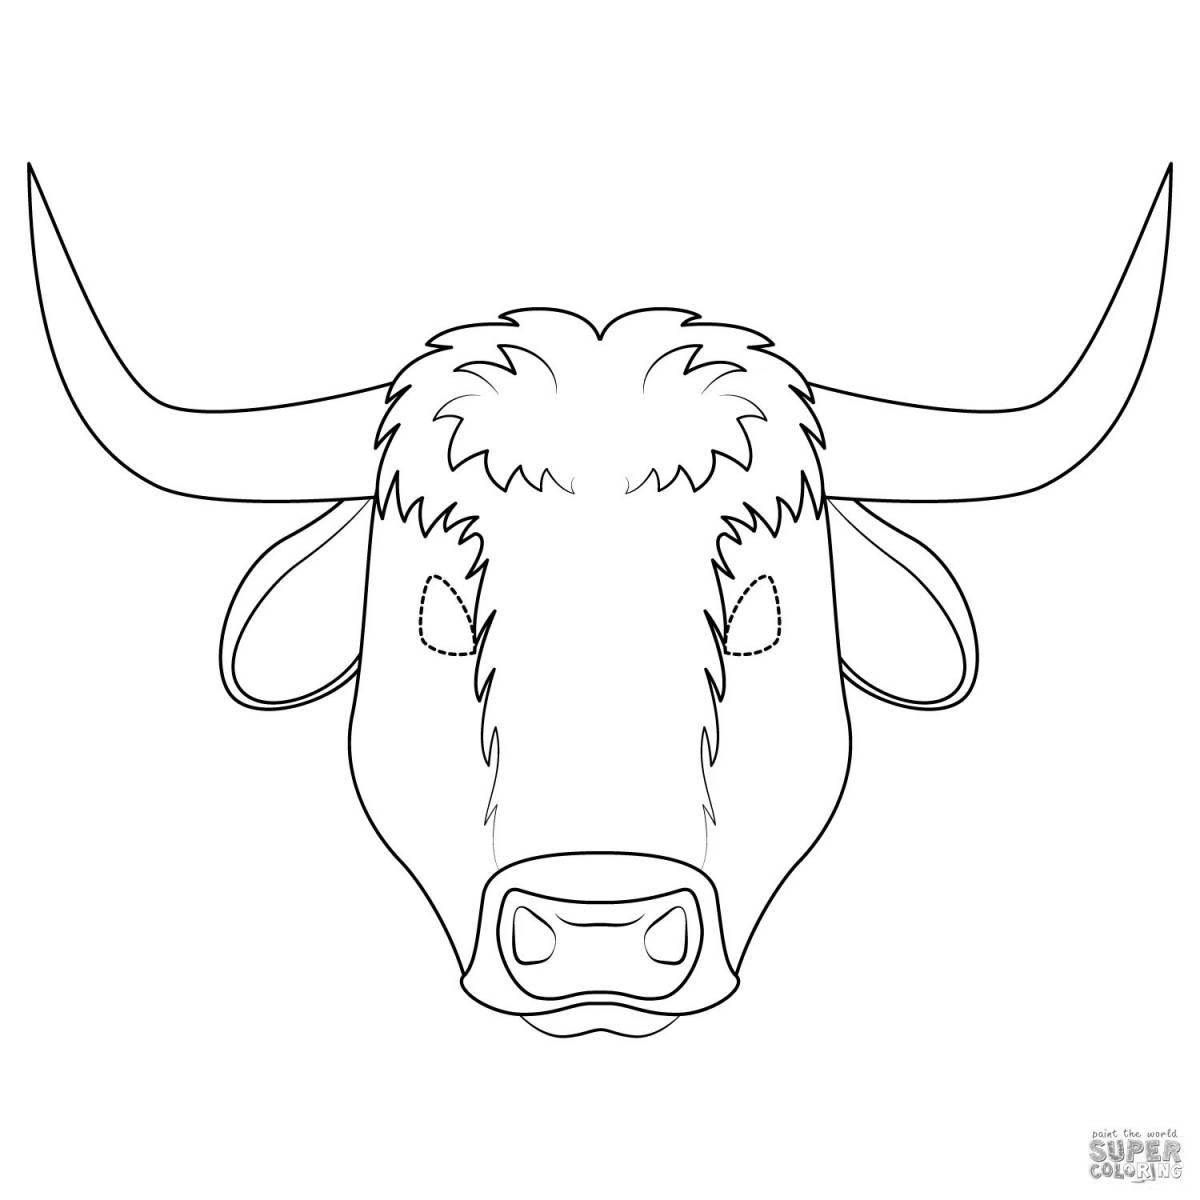 Adorable cow head coloring page